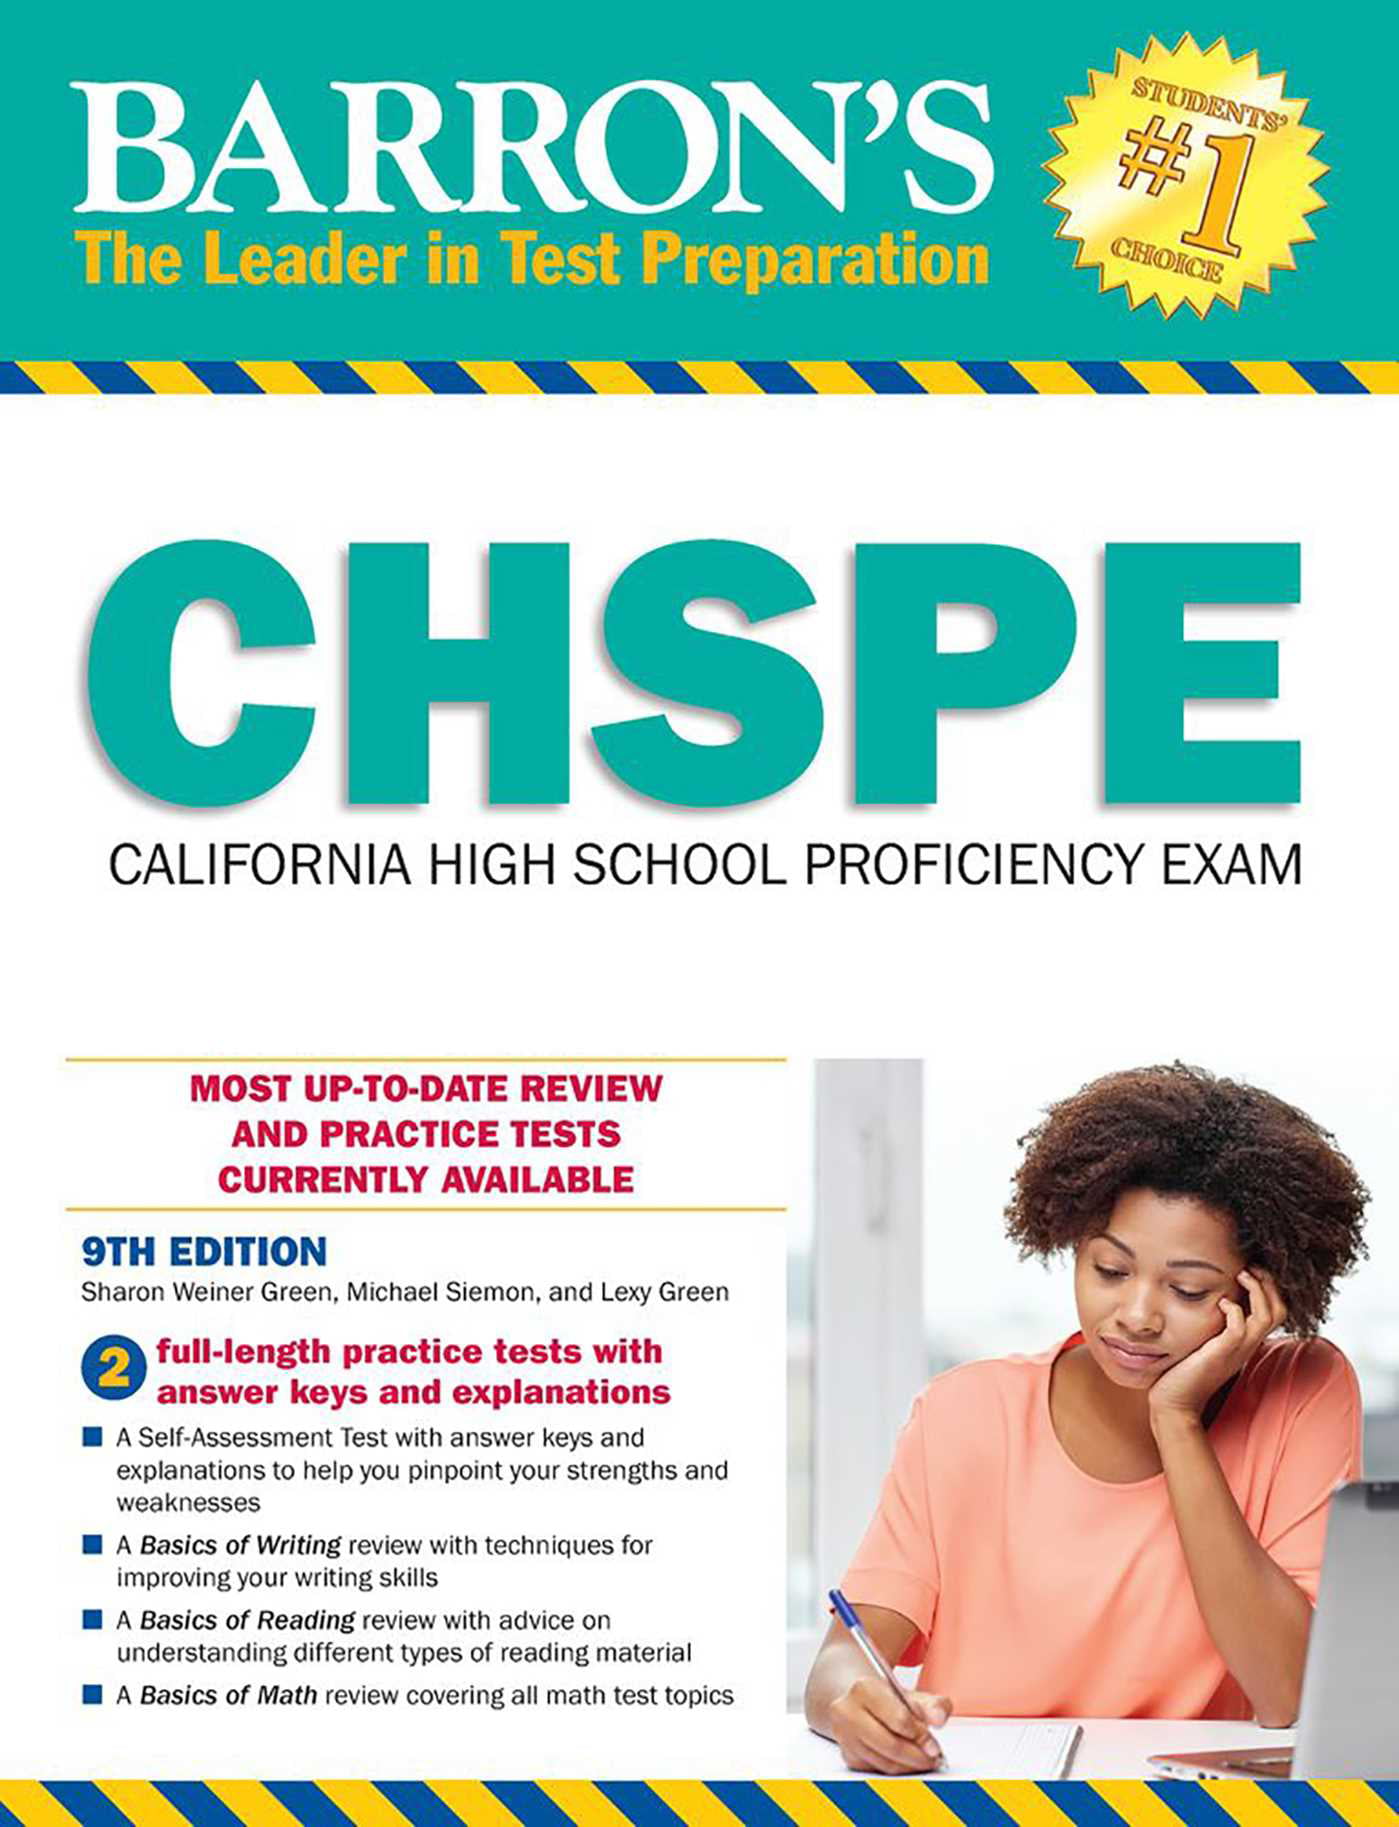 School　Exam　Test　Barron's　Proficiency　High　California　Prep　CHSPE　CA:　(Paperback)